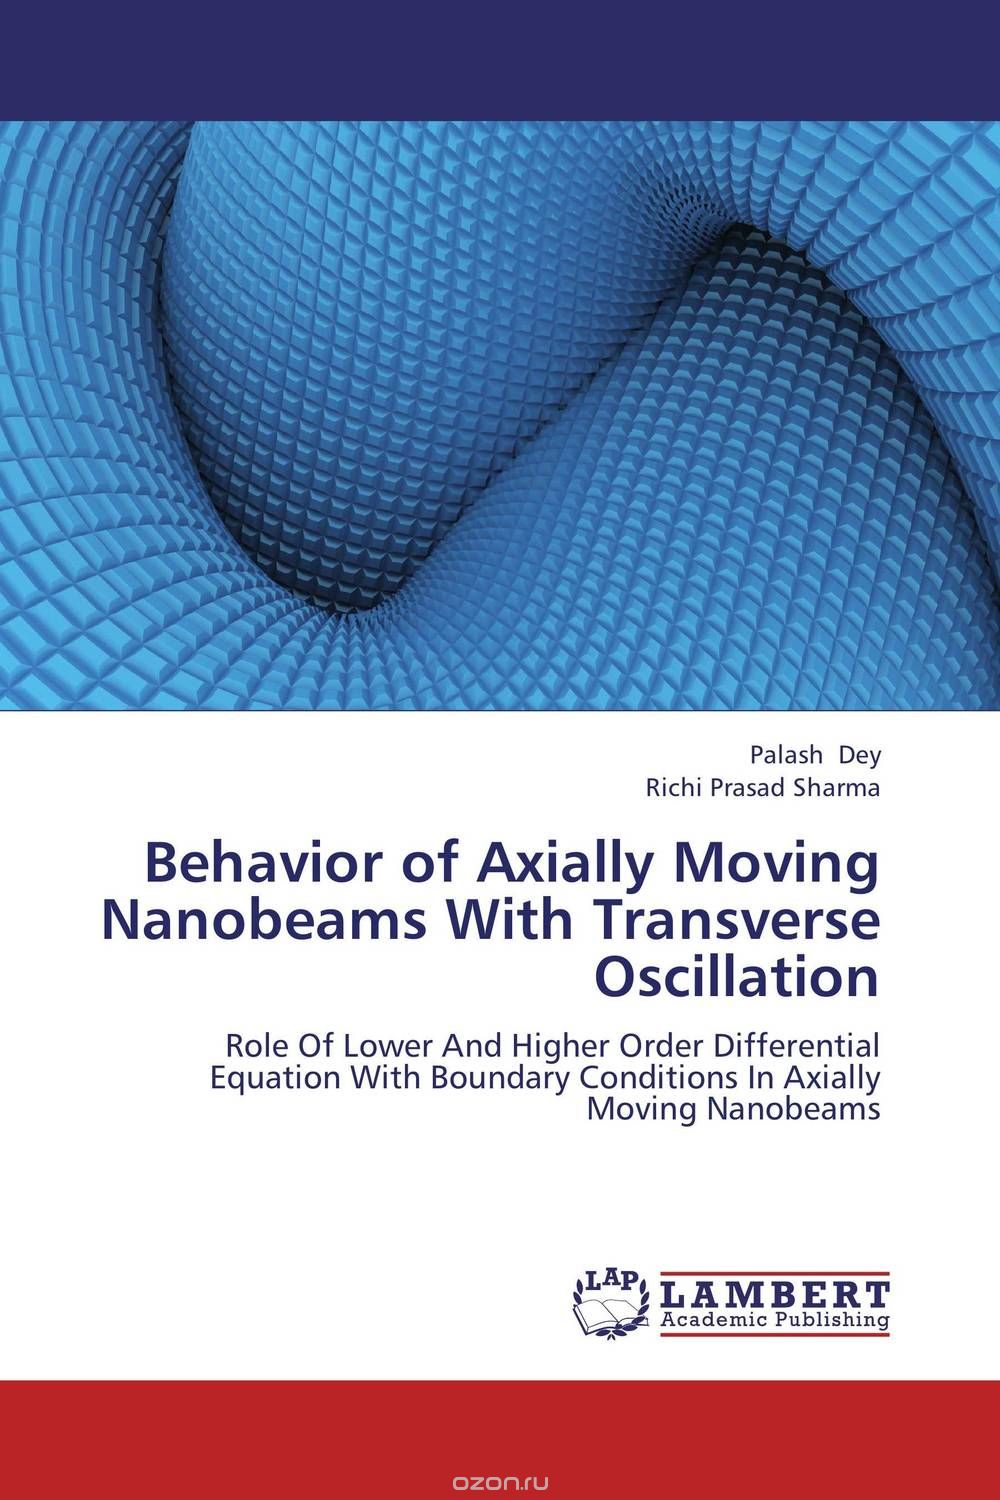 Скачать книгу "Behavior of Axially Moving Nanobeams With Transverse Oscillation"